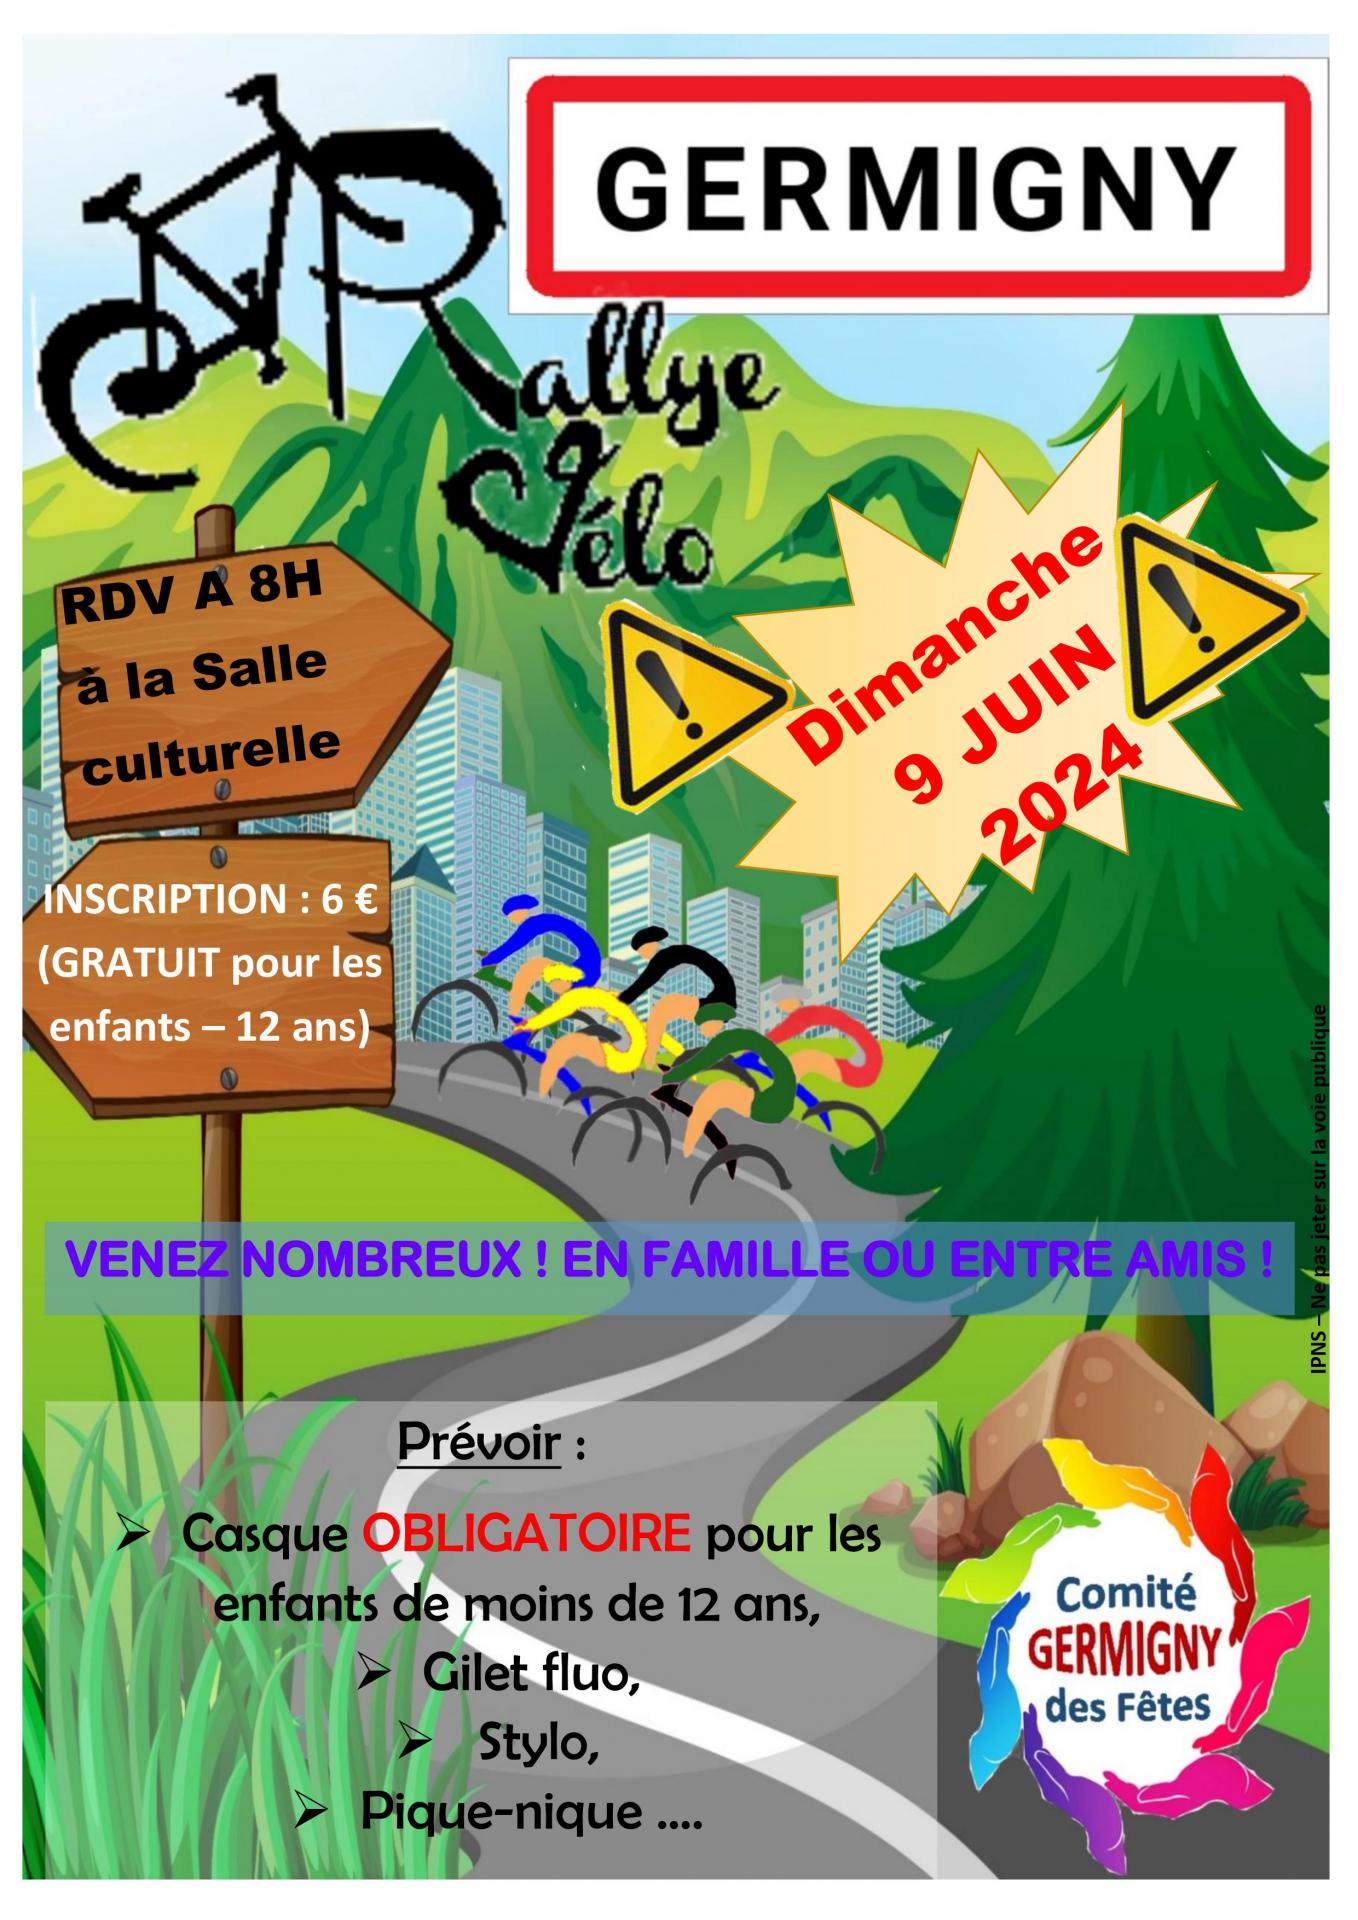 Rallye Vélo dimanche 9 juin